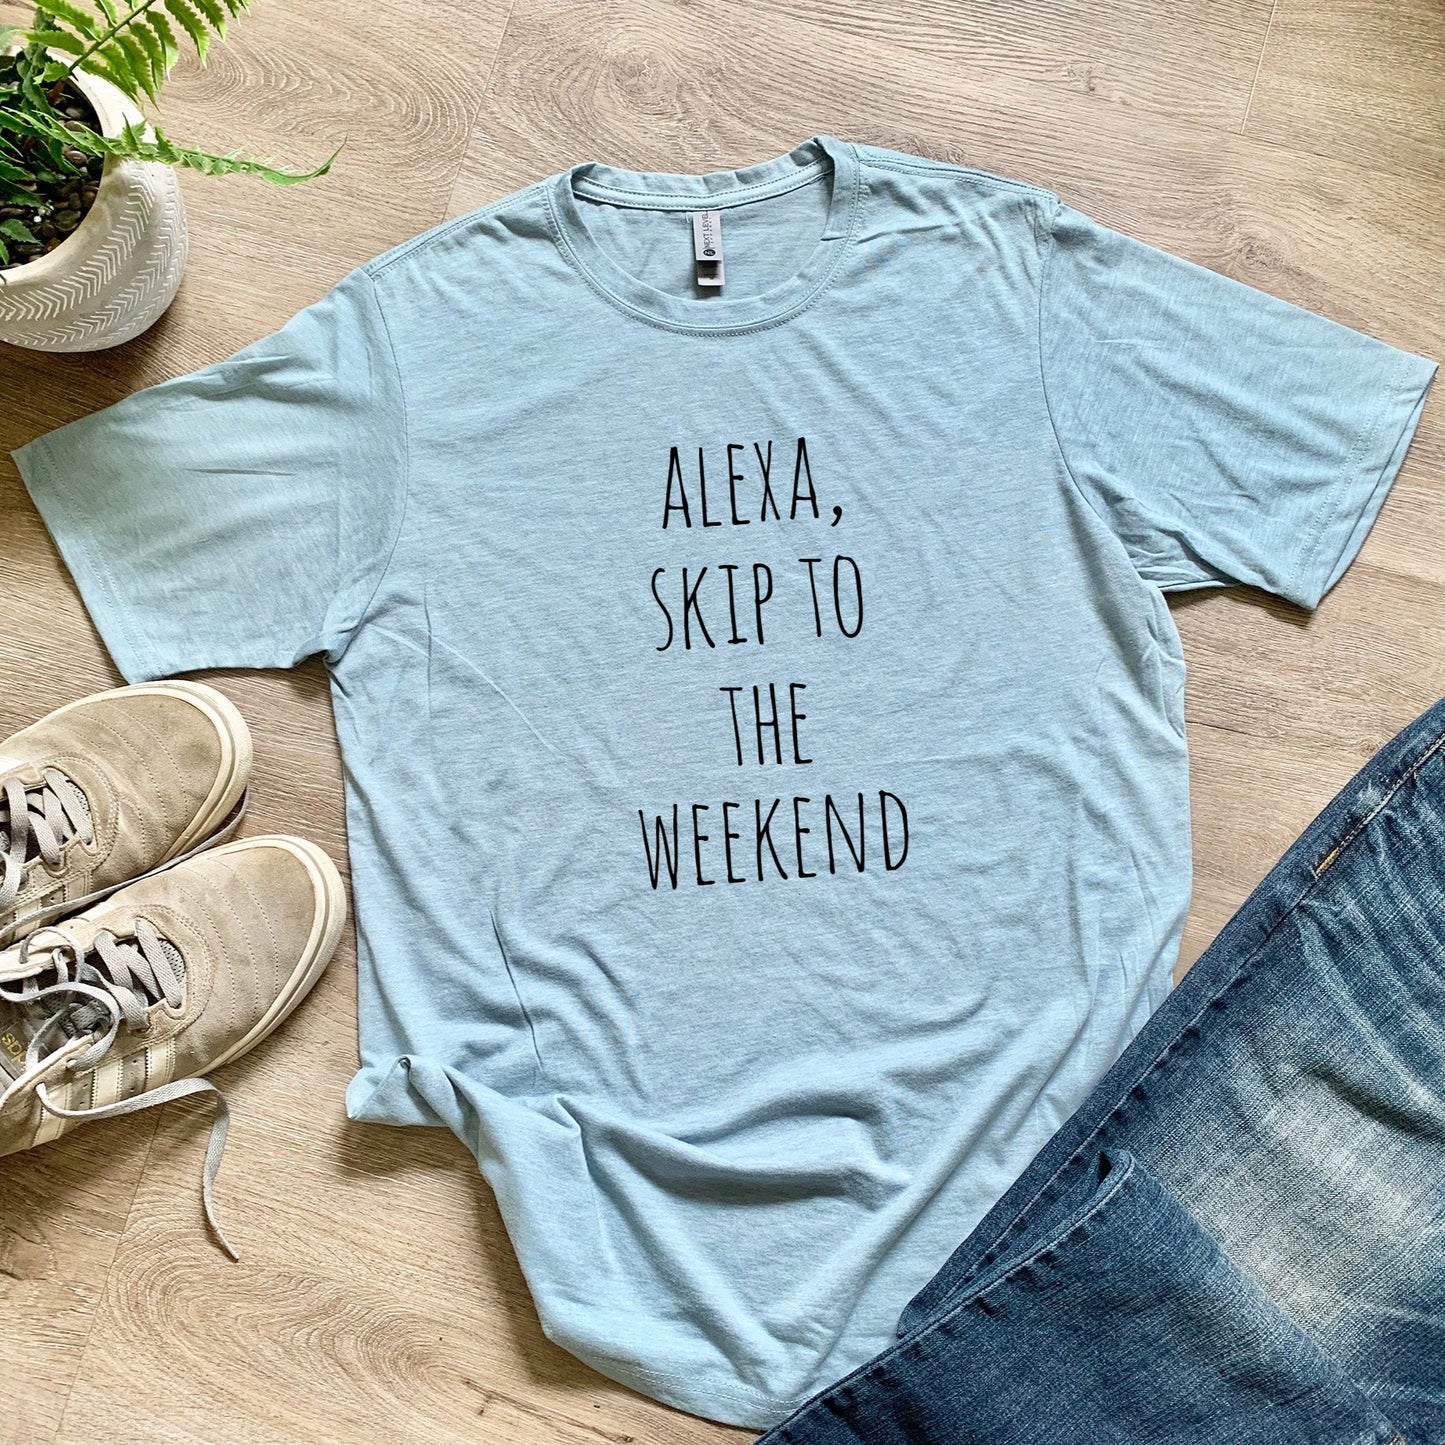 Alexa, Skip to the Weekend - Men's / Unisex Tee - Stonewash Blue or Sage